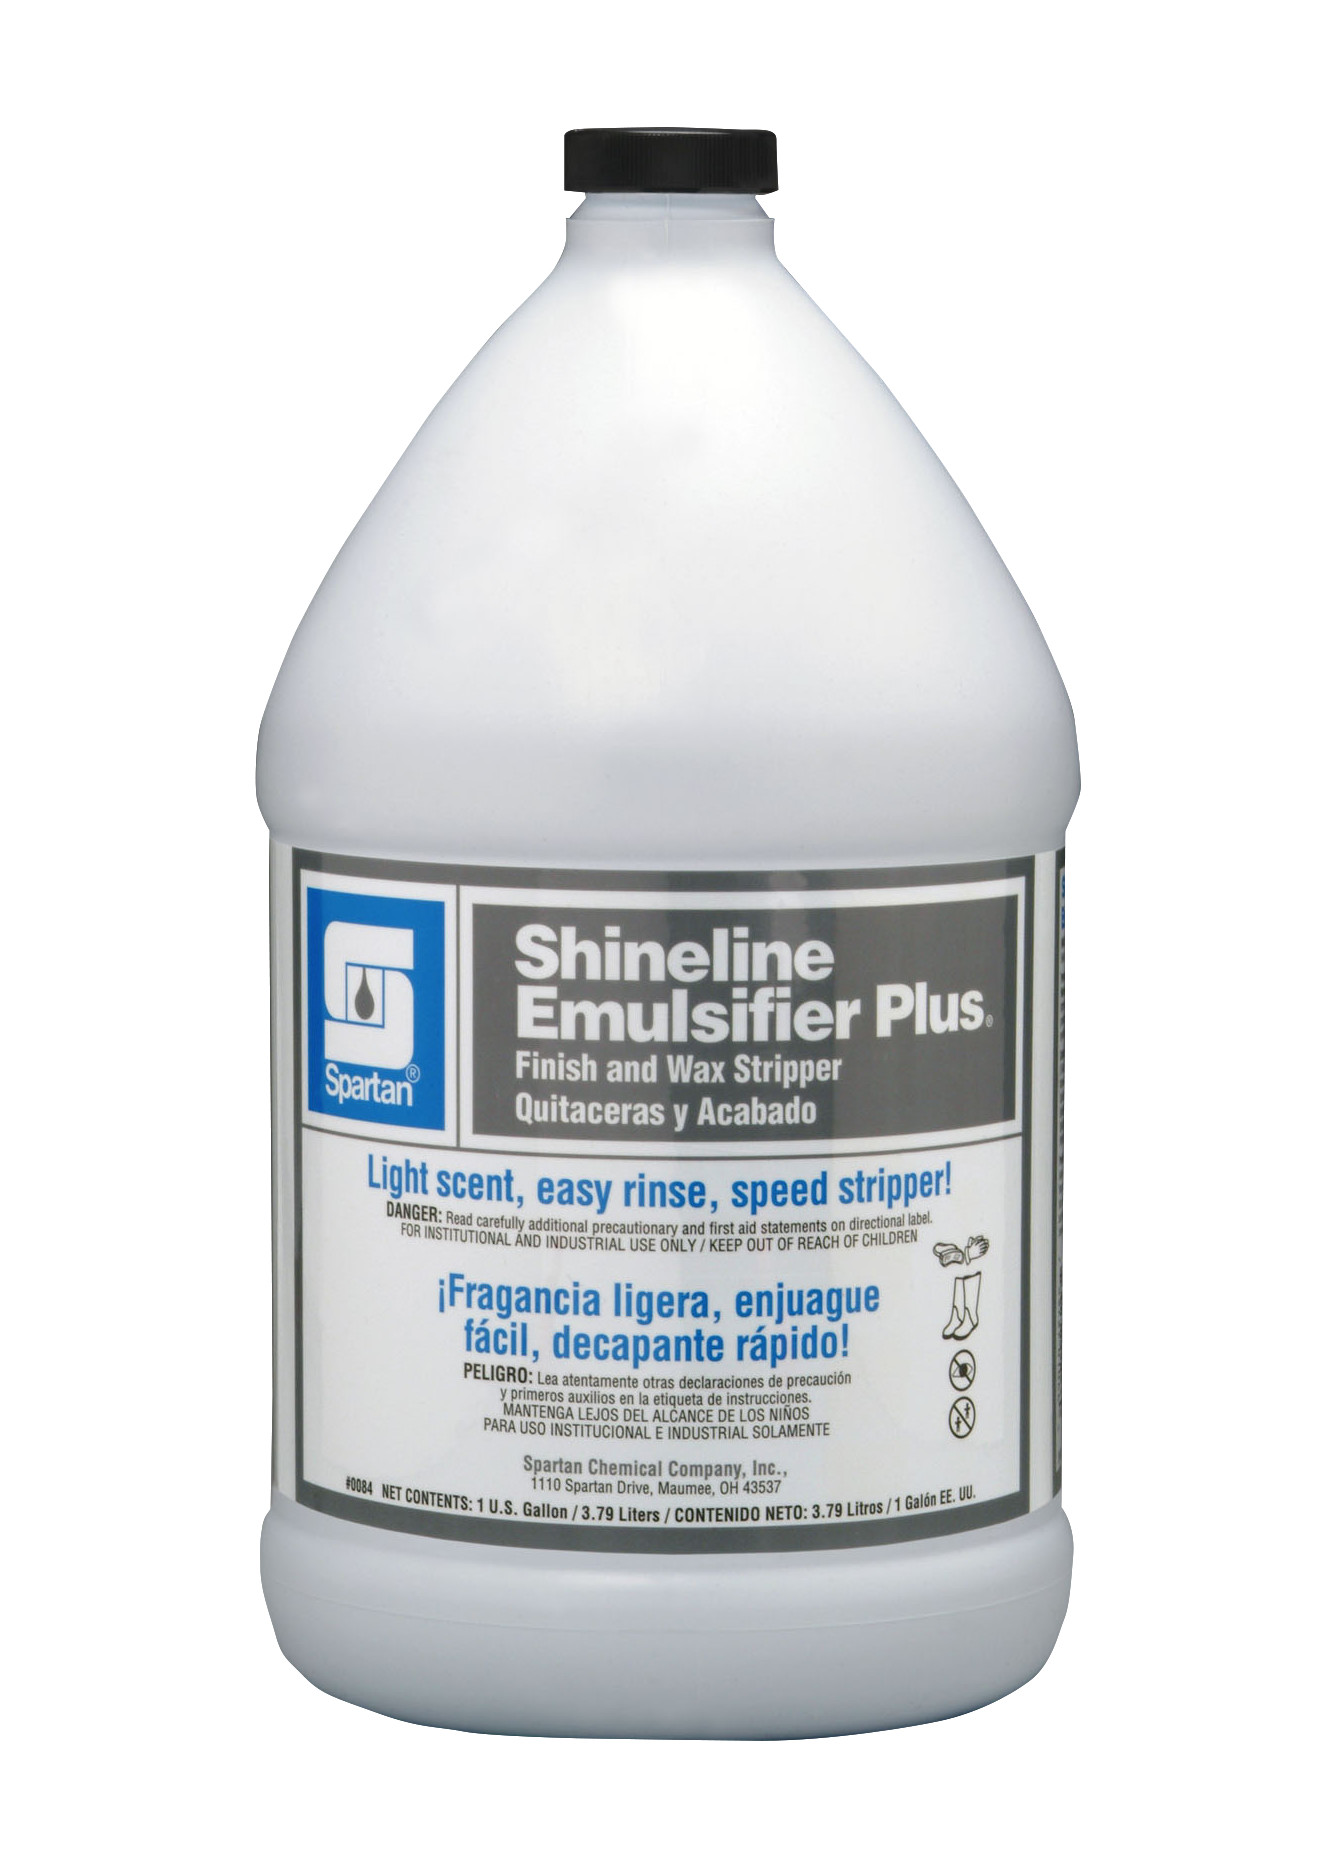 Shineline+Emulsifier+Plus+%7B1+gallon+%284+per+case%29%7D